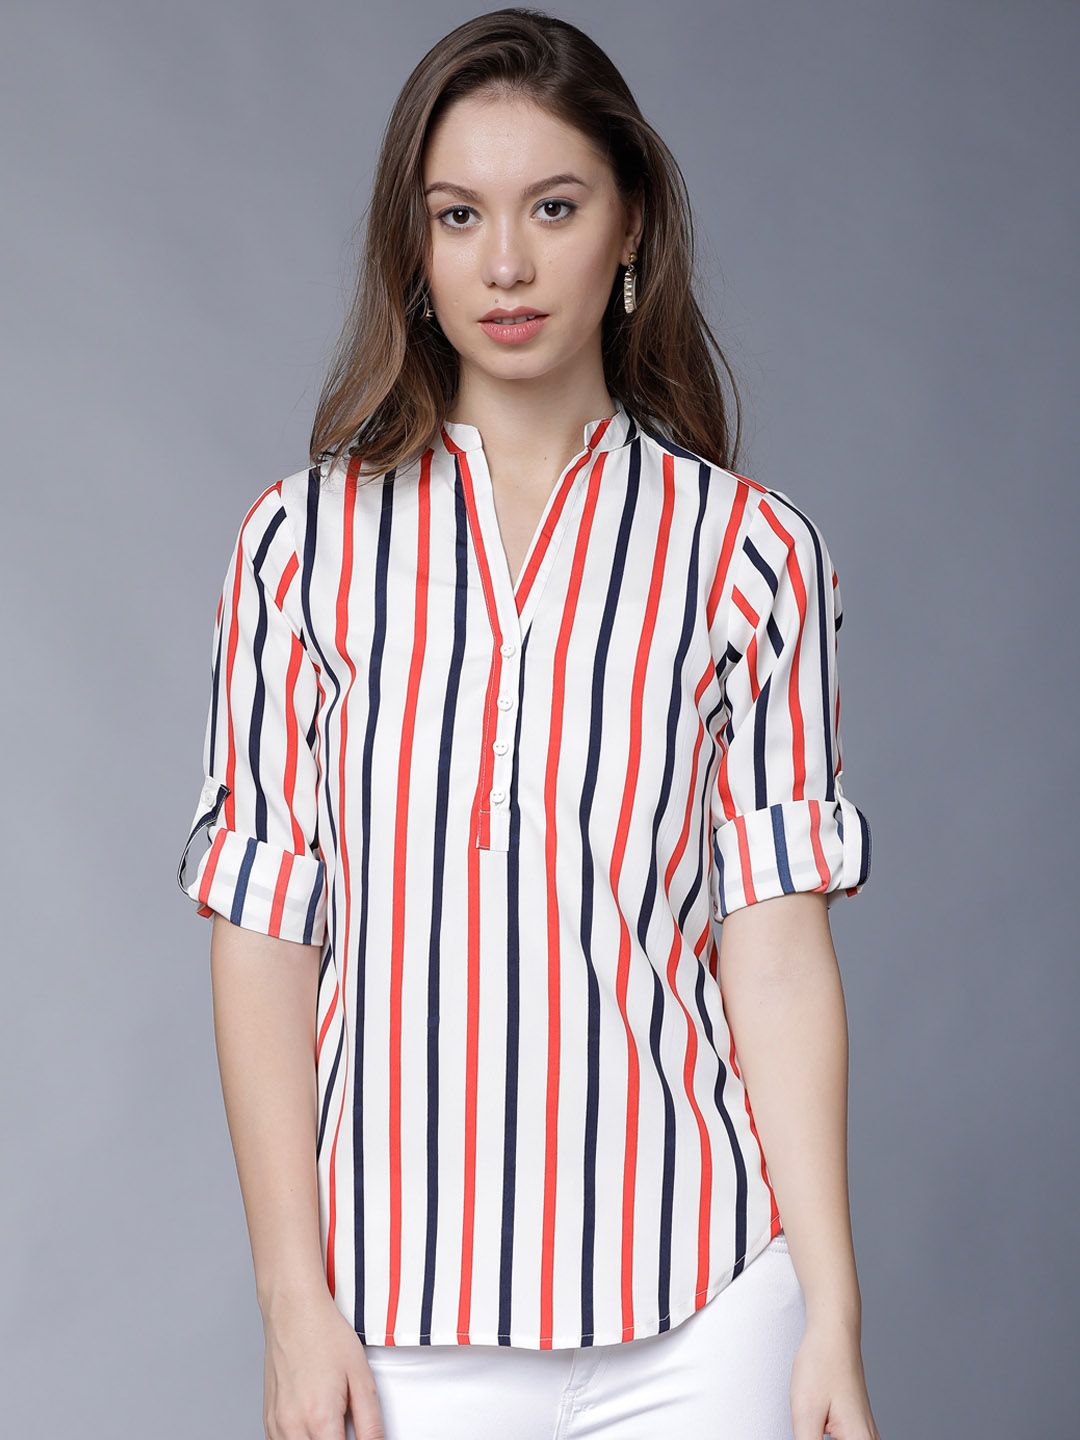 Tokyo Talkies Women White Striped Shirt Style Top Price in India